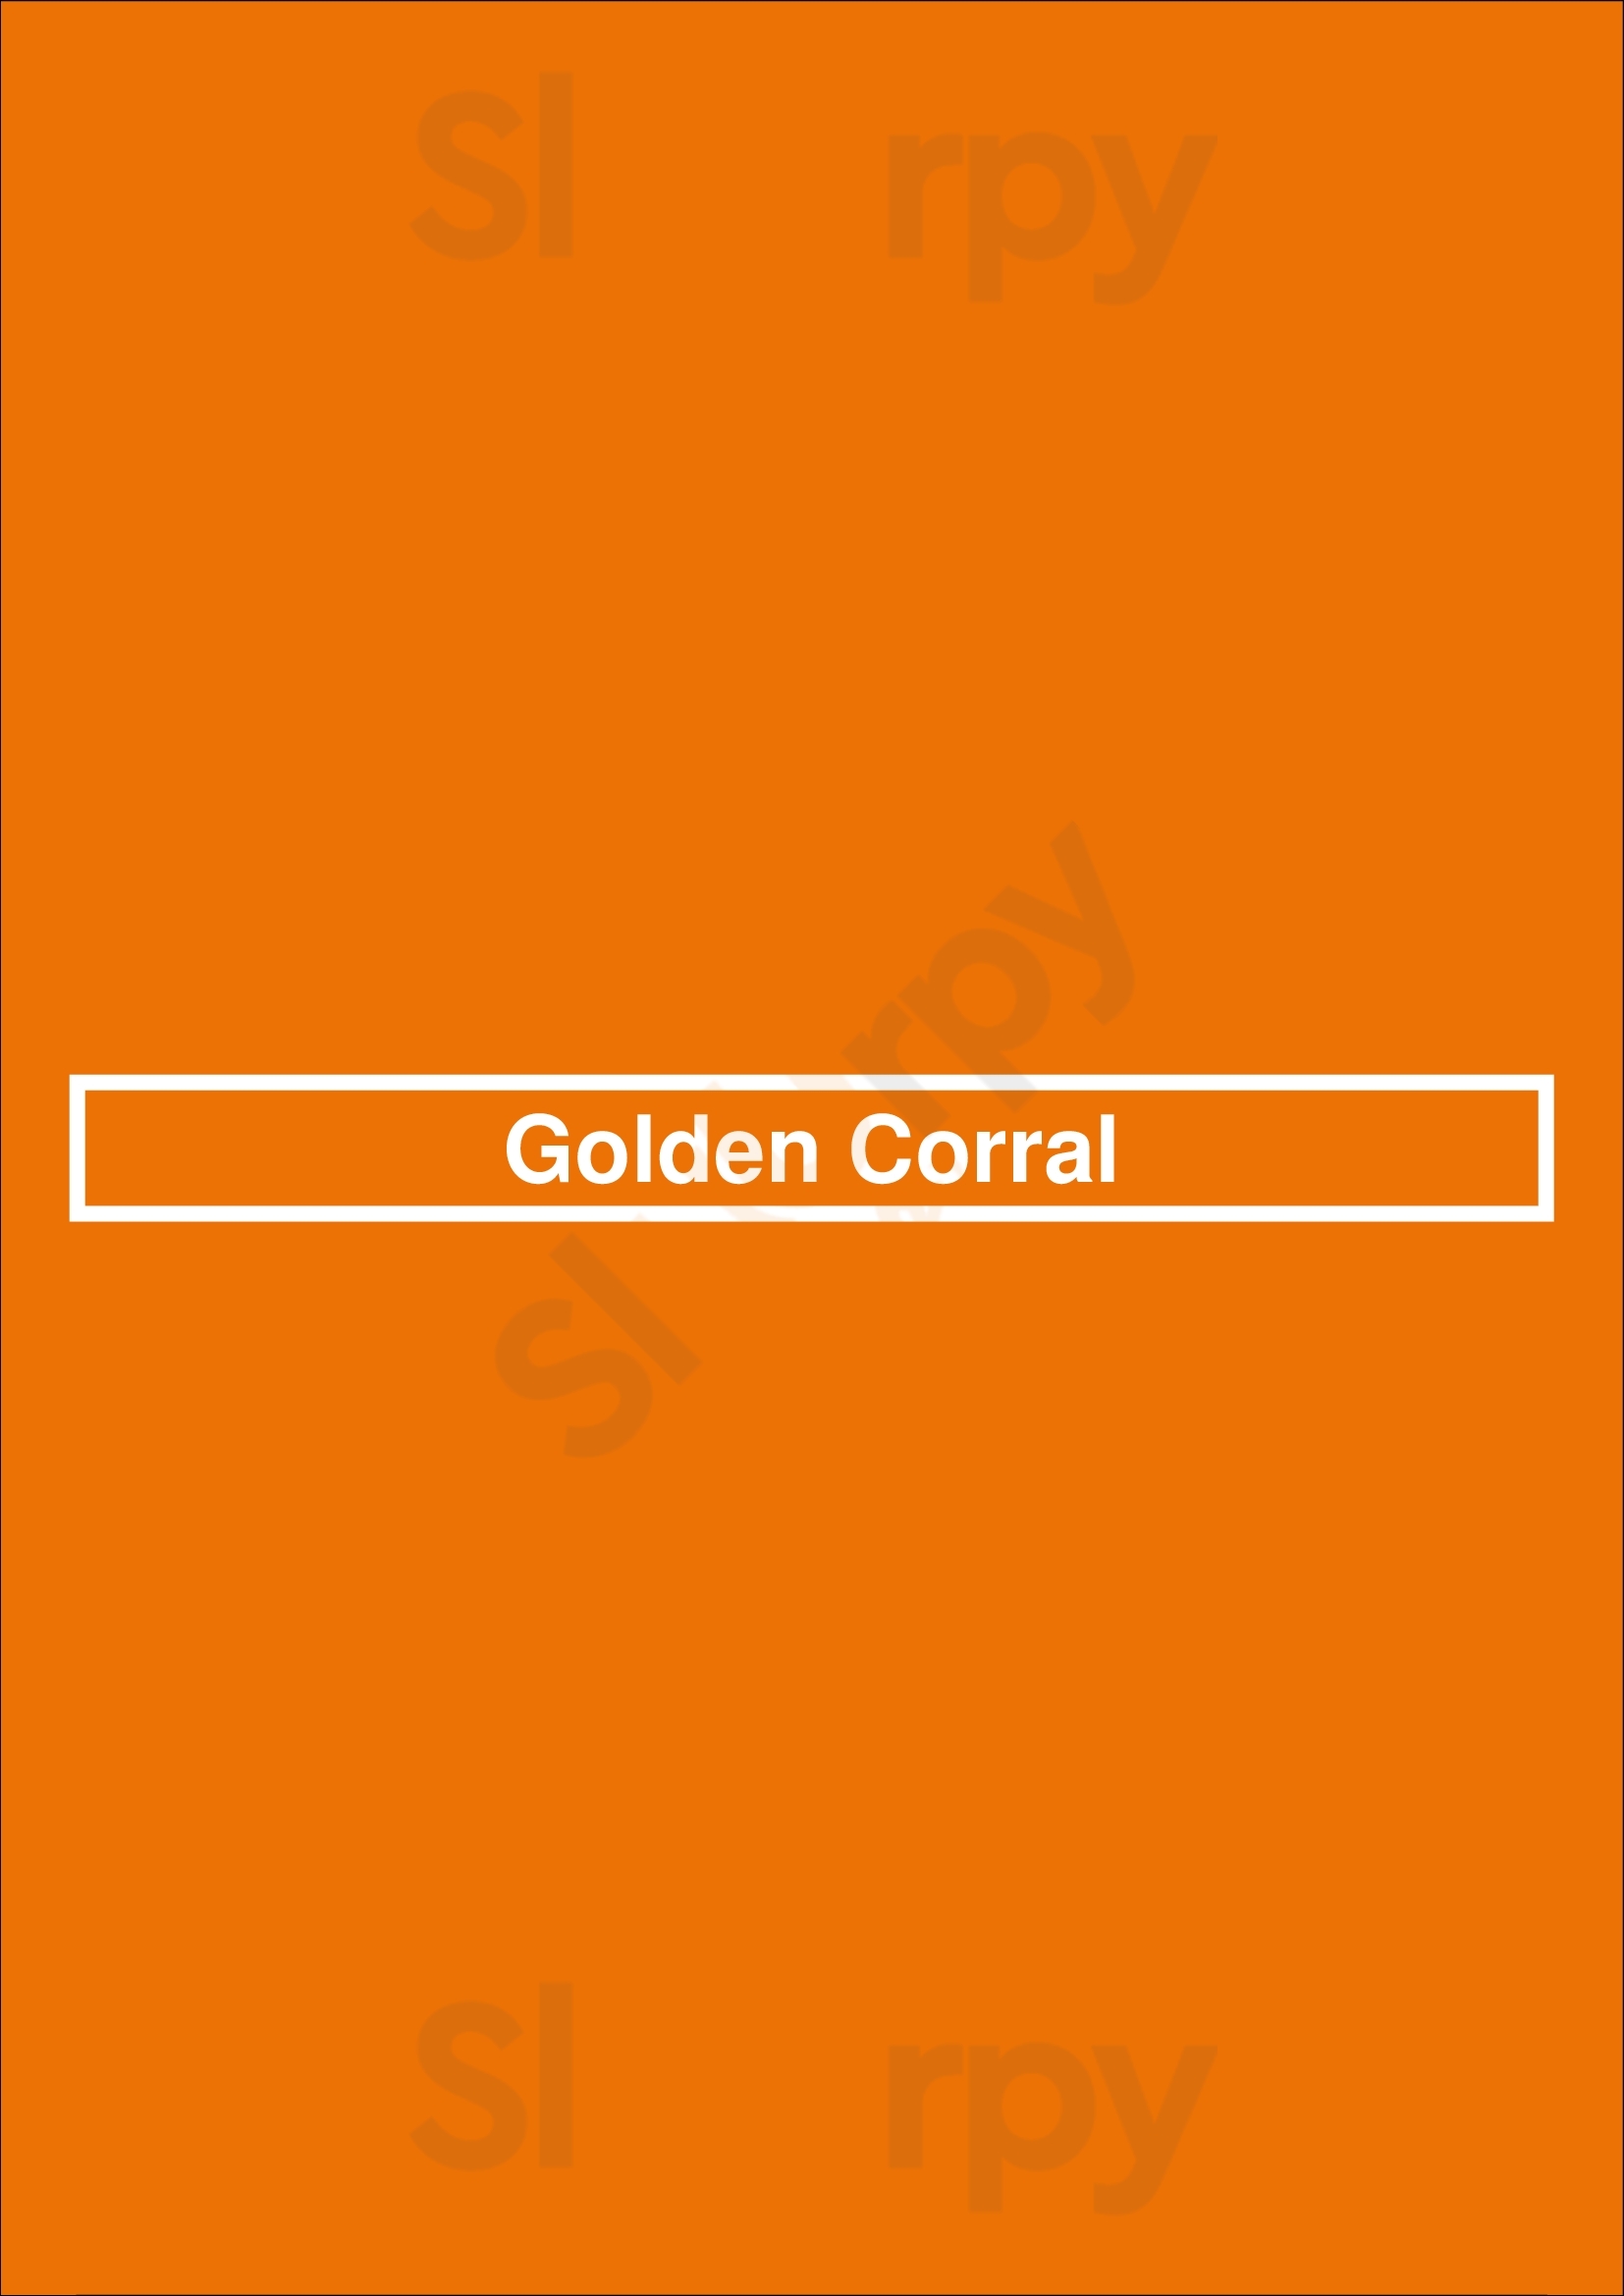 Golden Corral Austin Menu - 1